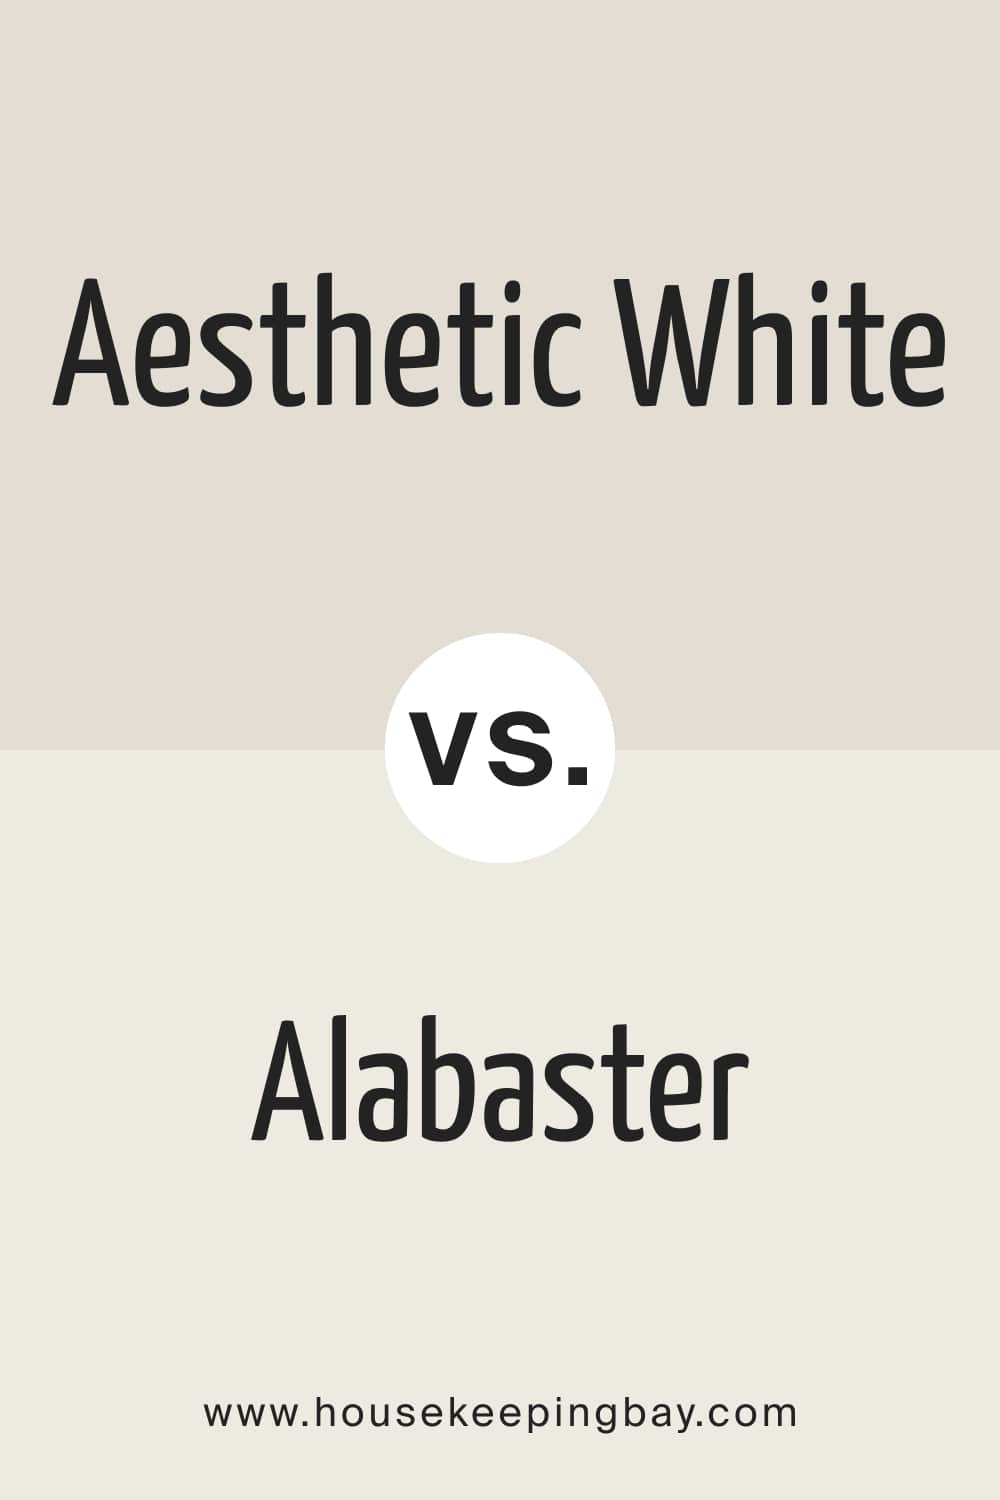 Aesthetic White vs. Alabaster